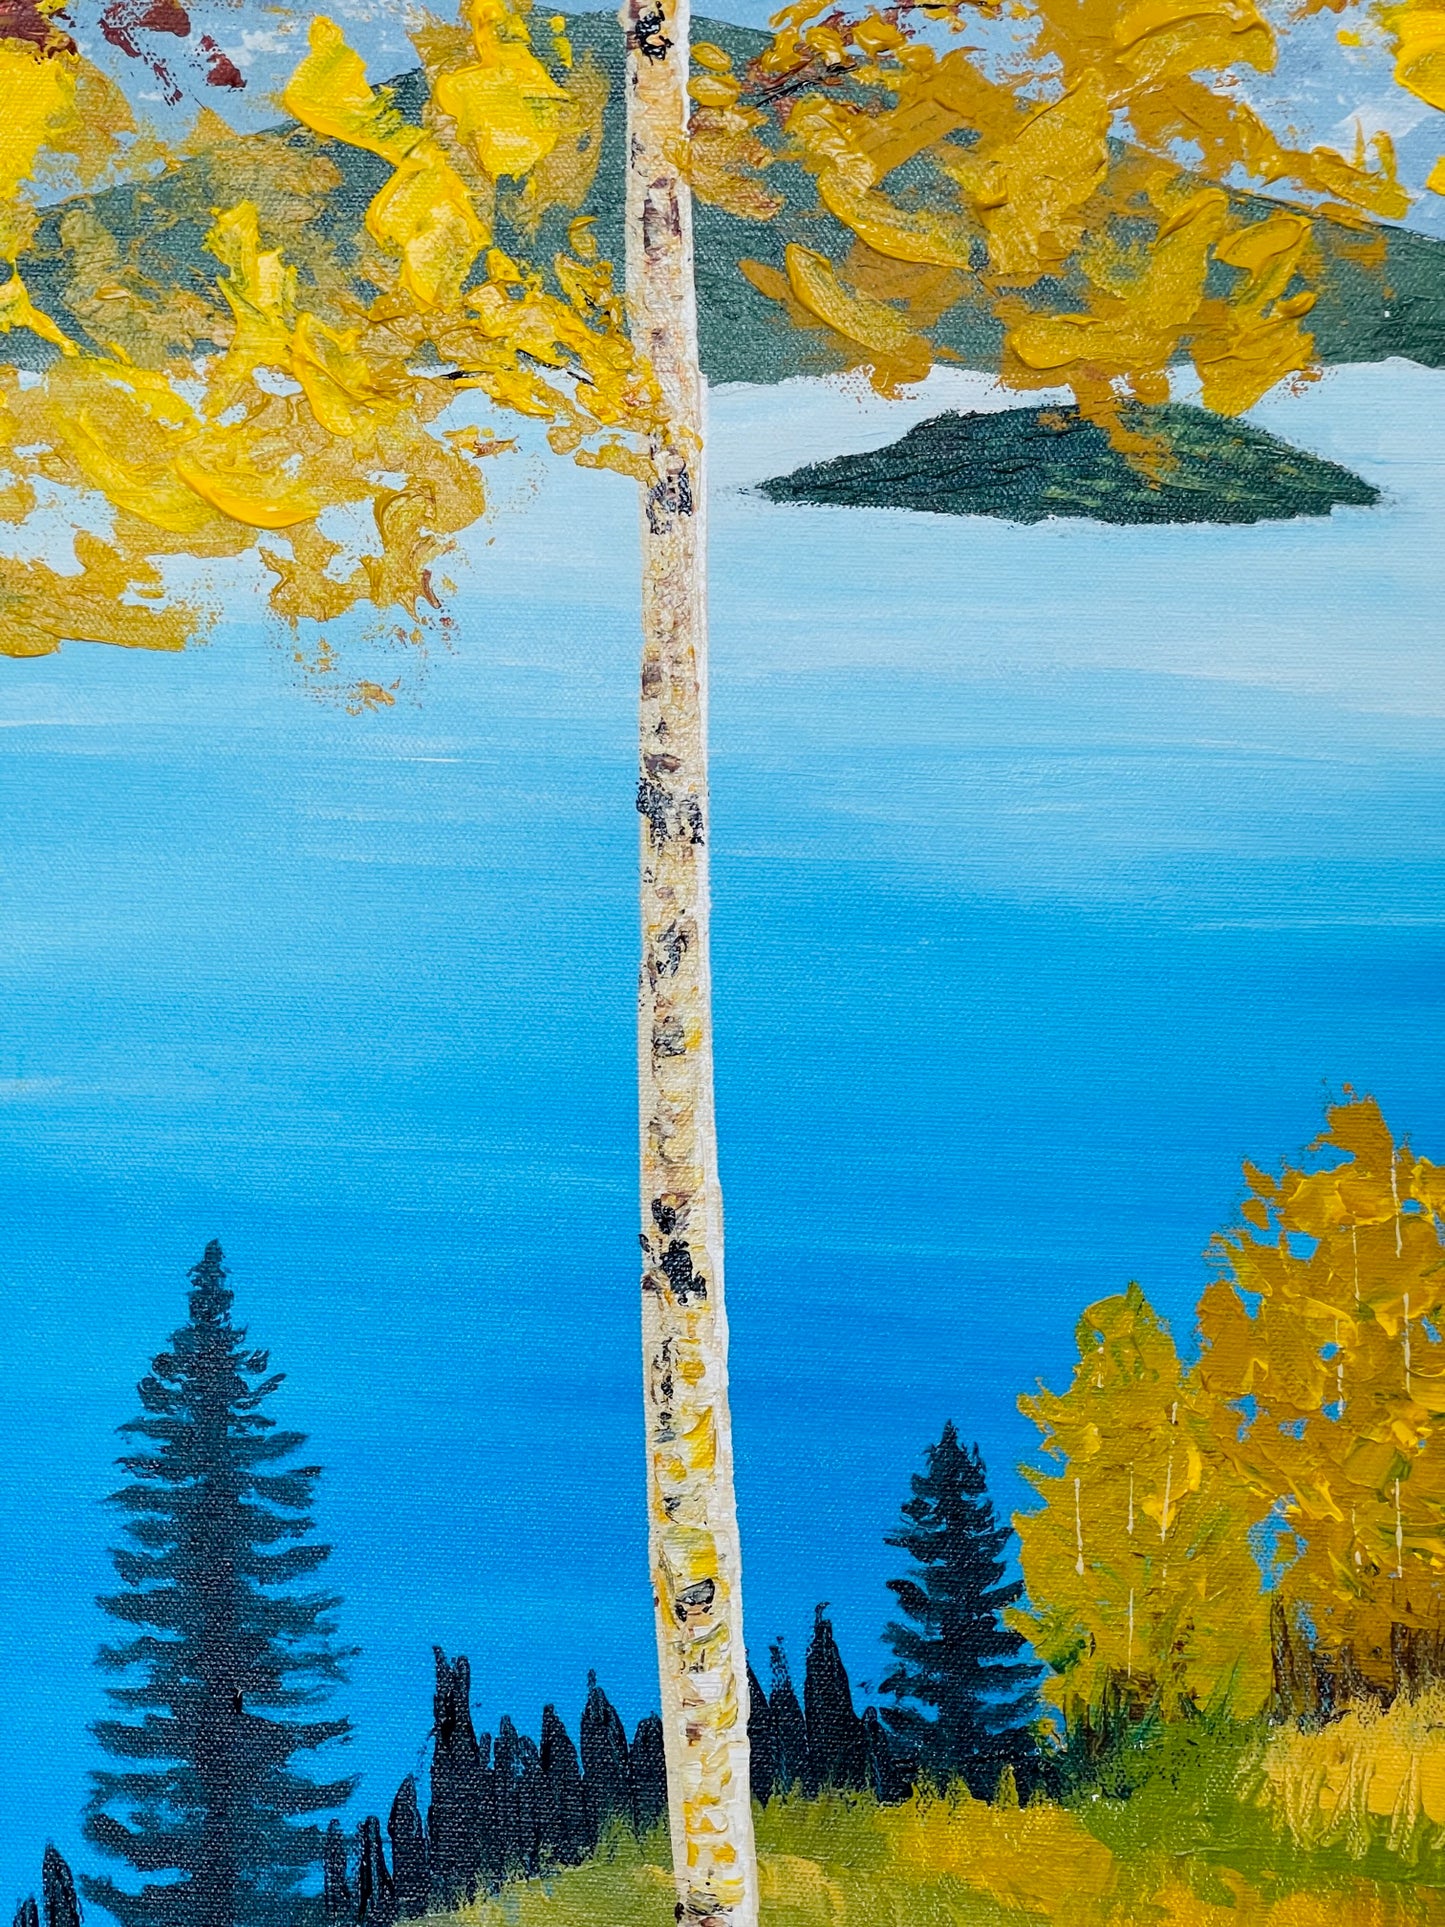 Aspen Trees near a Lake